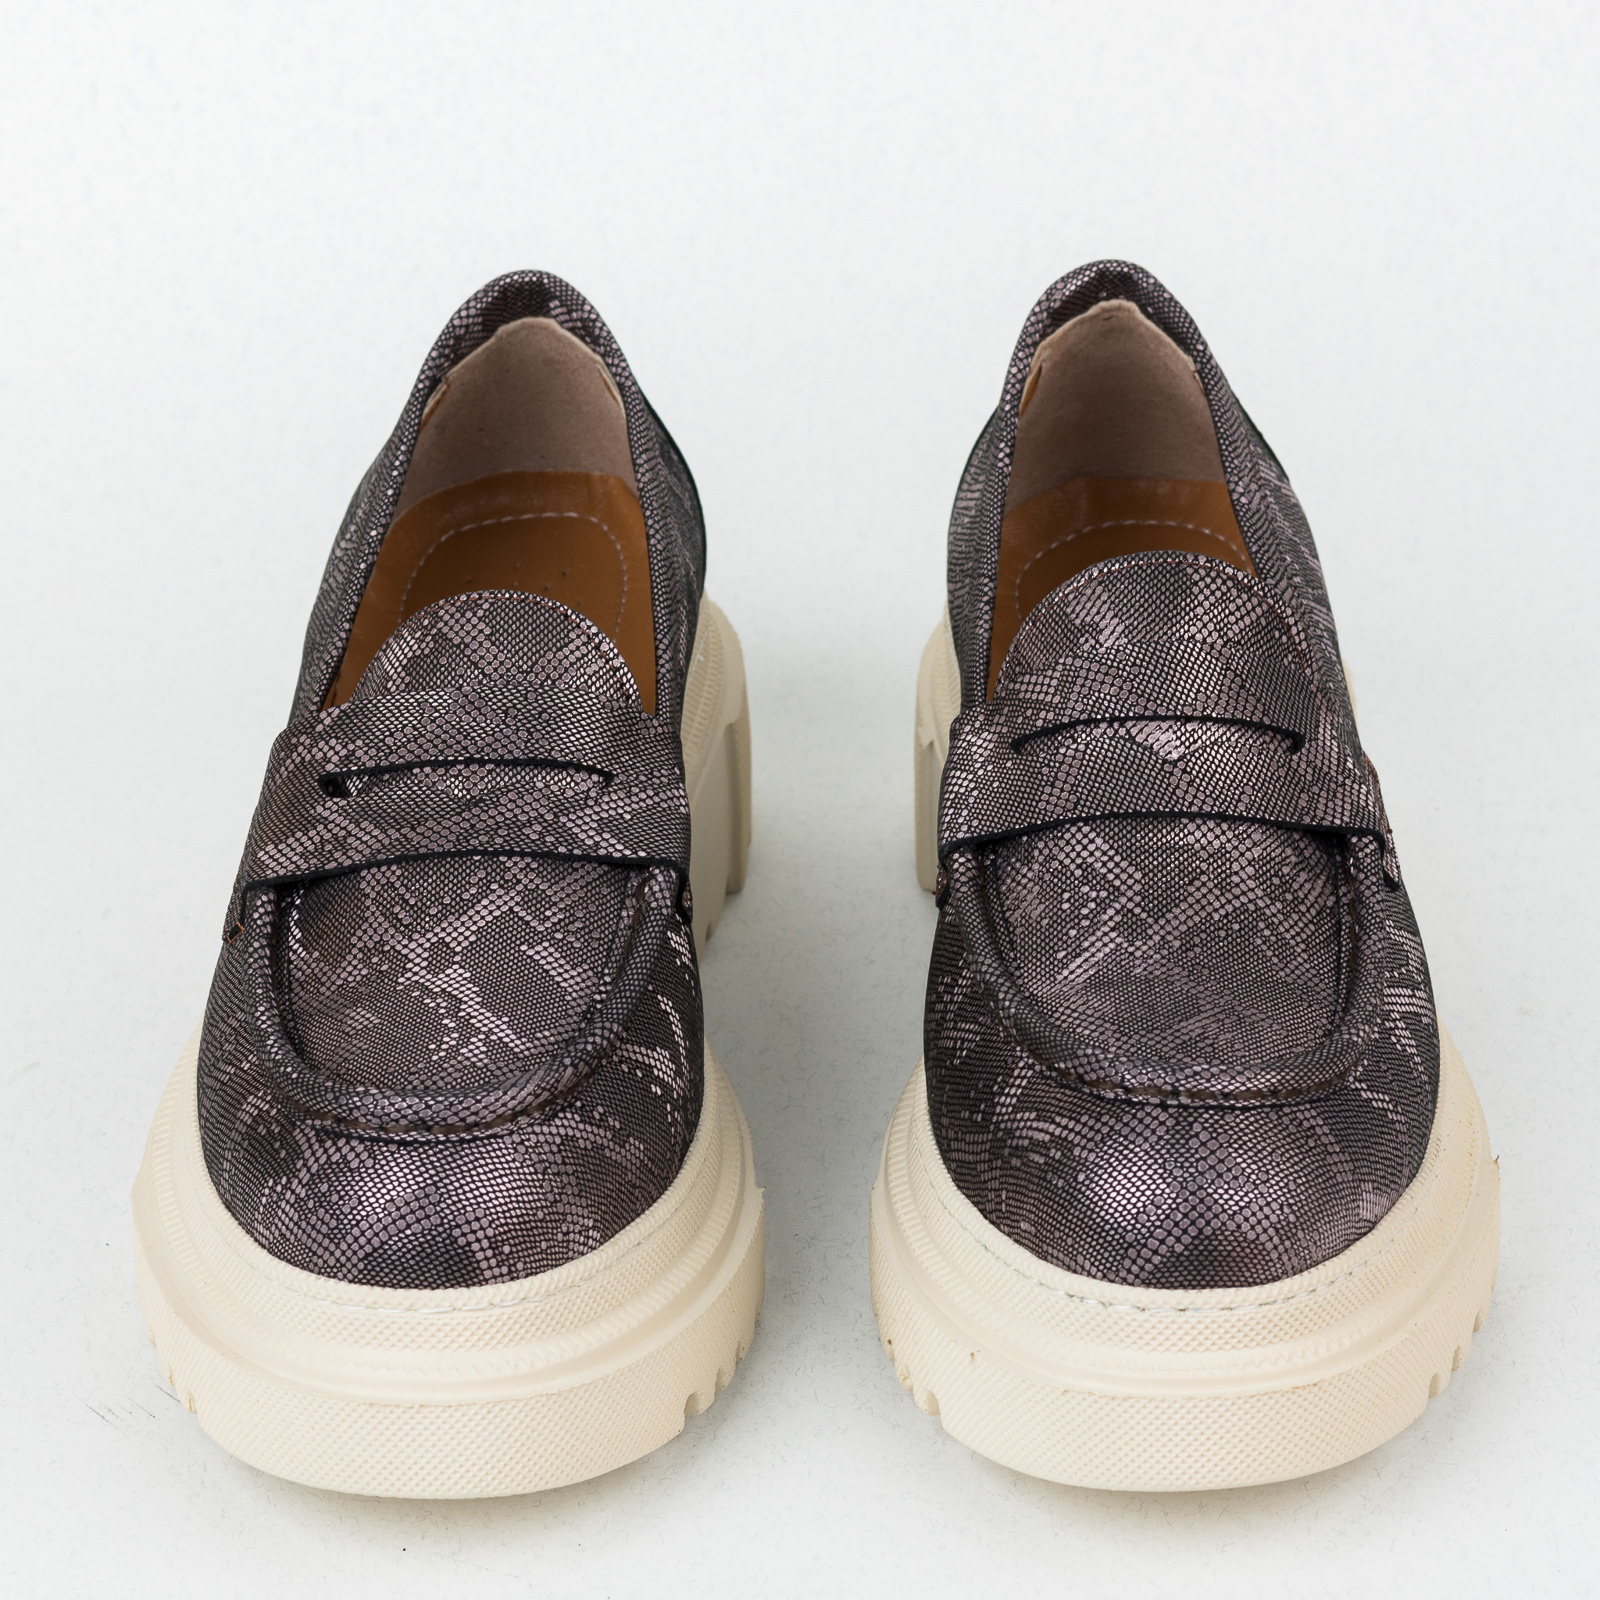 Leather shoes & flats B468 - GRAFIT